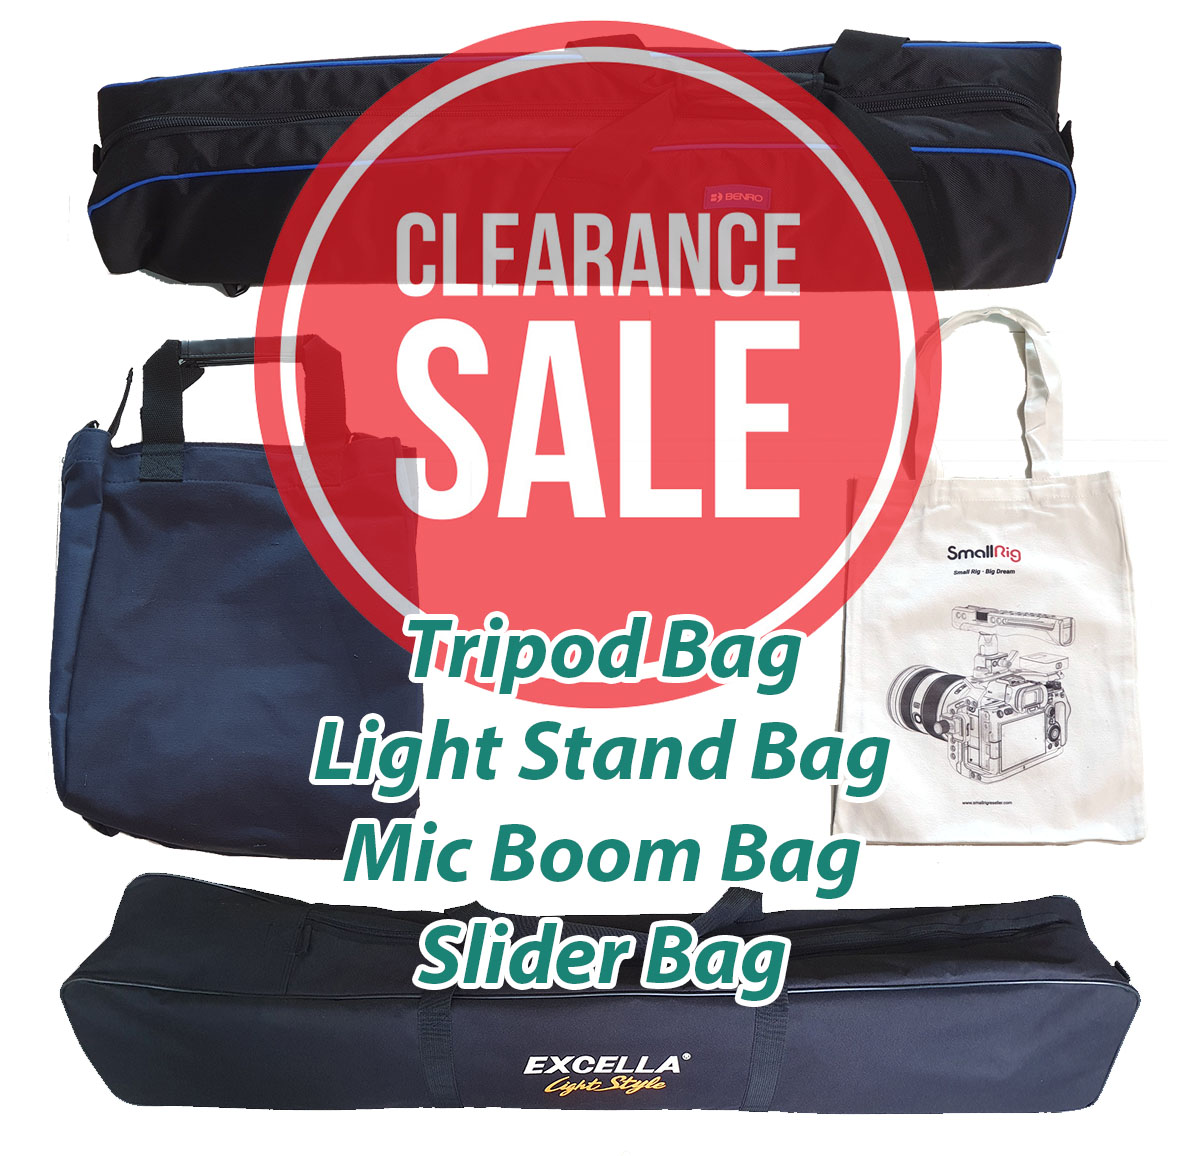 CLEARANCE SALE กระเป๋าขาตั้งกล้อง / ขาไฟ / ไมค์บูม Tripod Bag / Light Stand Bag / Mic Boom Bag / Slider Bag